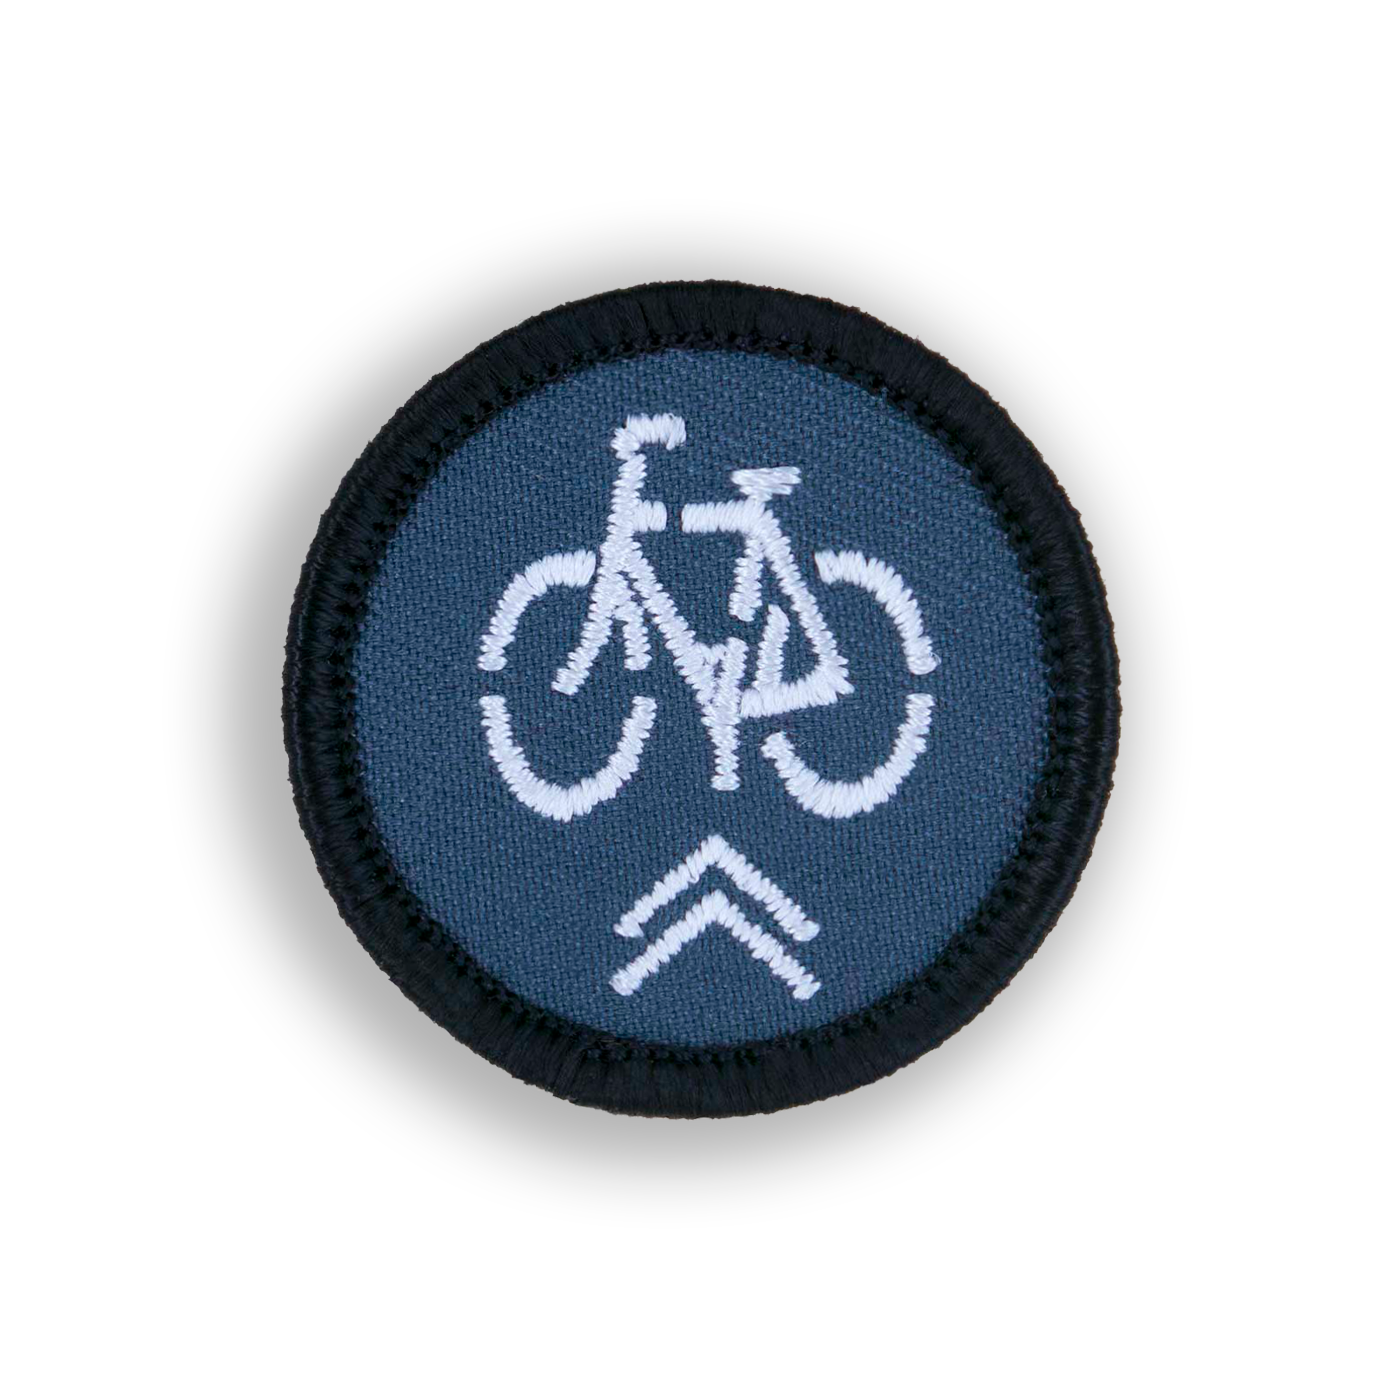 Bike Commuter Patch - Demerit Wear - Fake Merit Badges